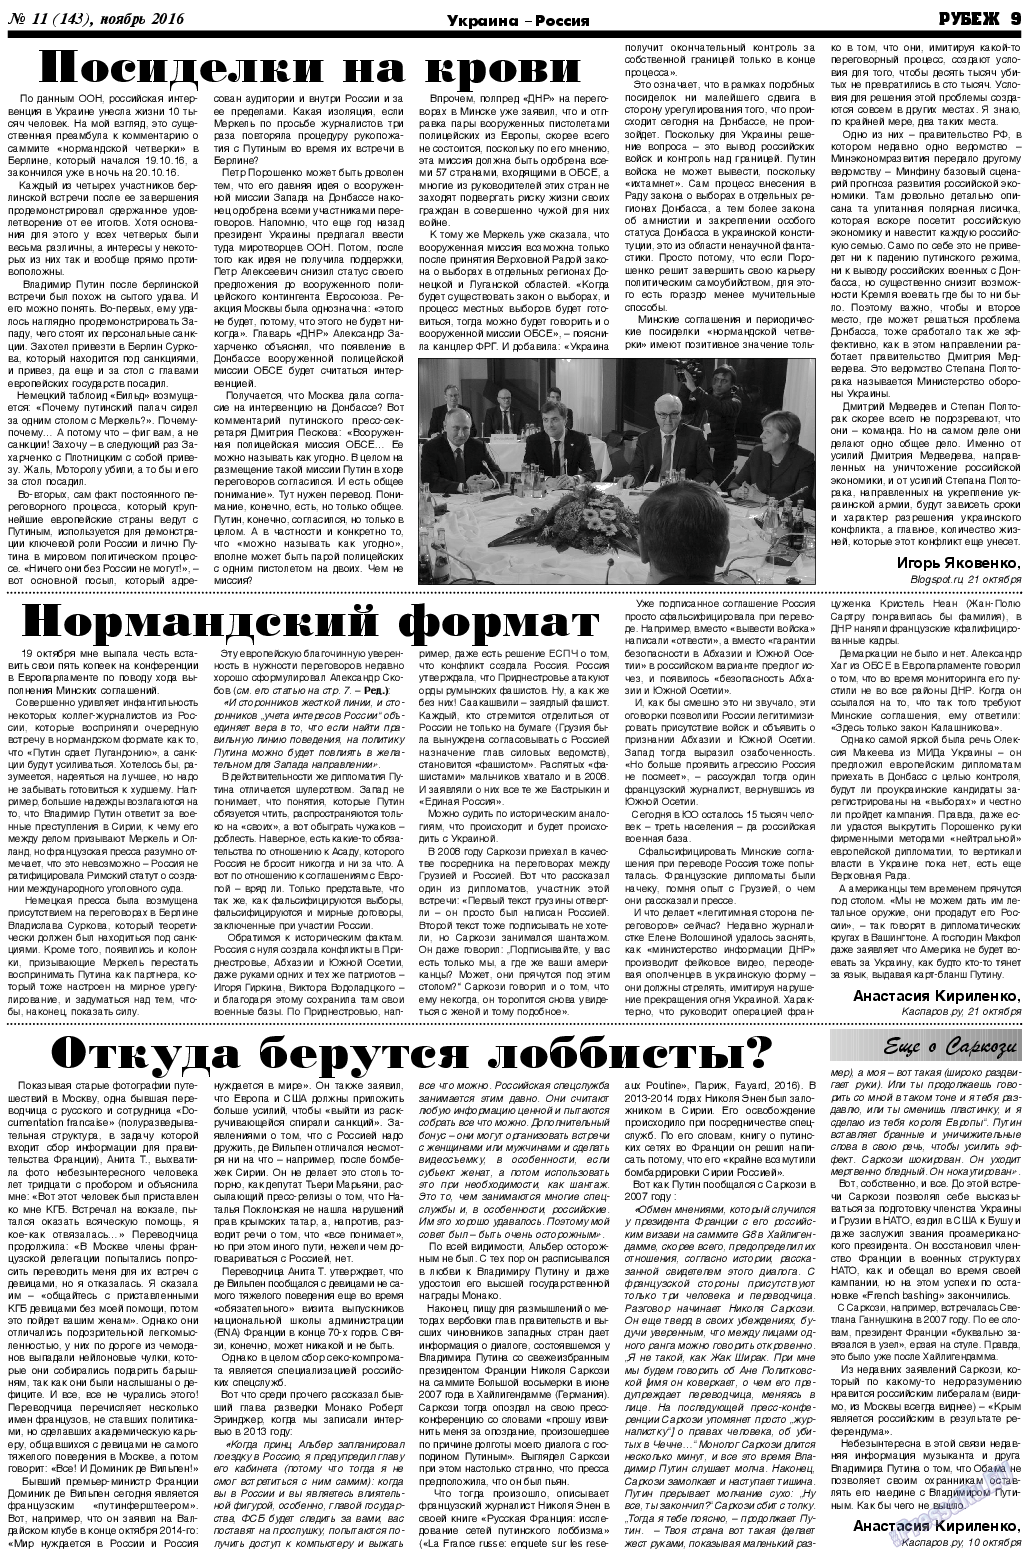 Рубеж, газета. 2016 №11 стр.9